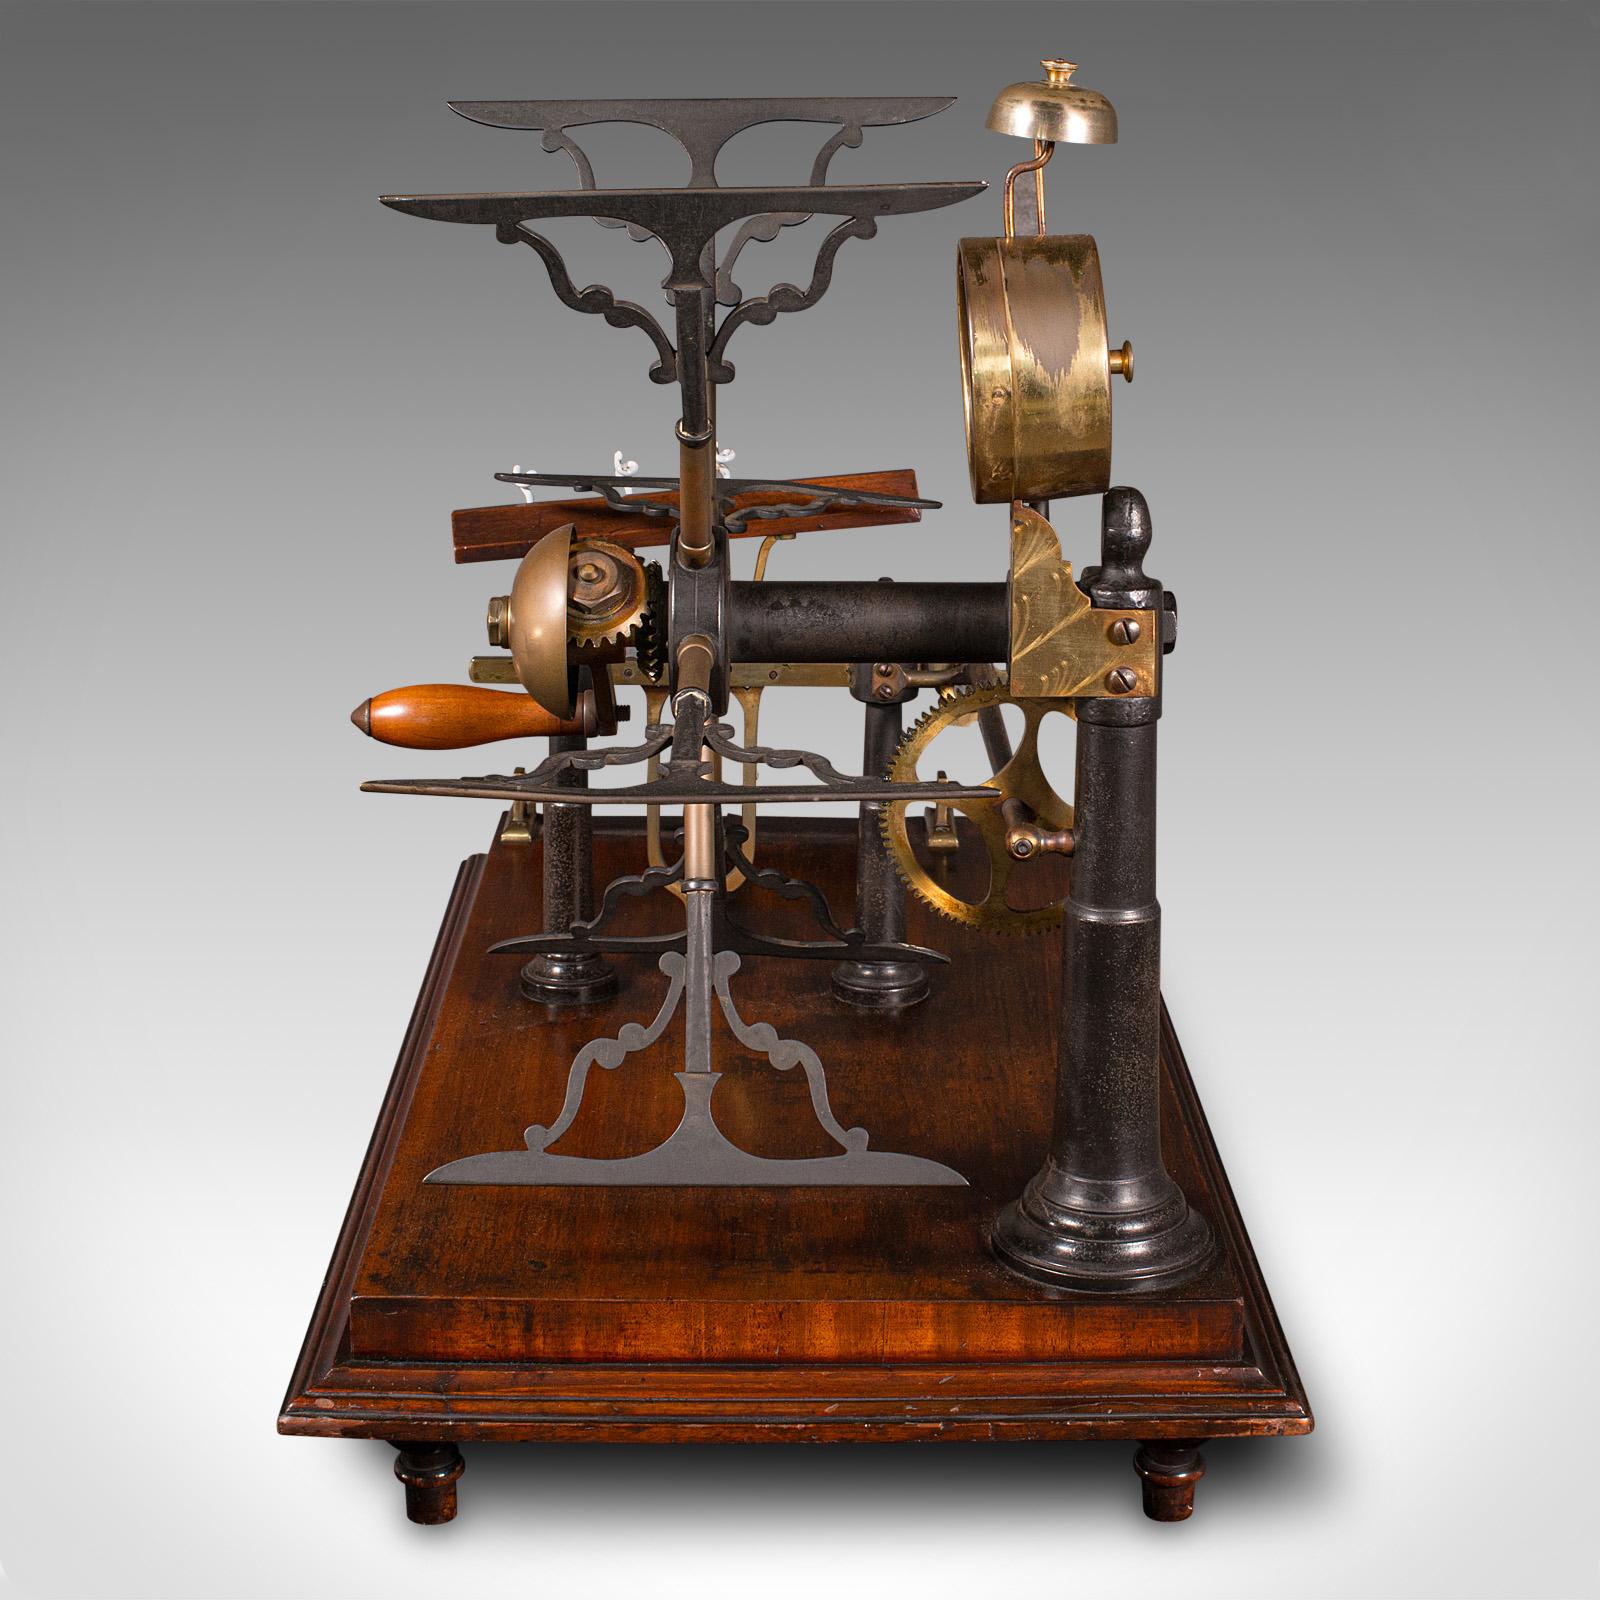 19th Century Antique Wrap Reel Machine, English, Factory, Cotton, John Nesbitt, Victorian For Sale